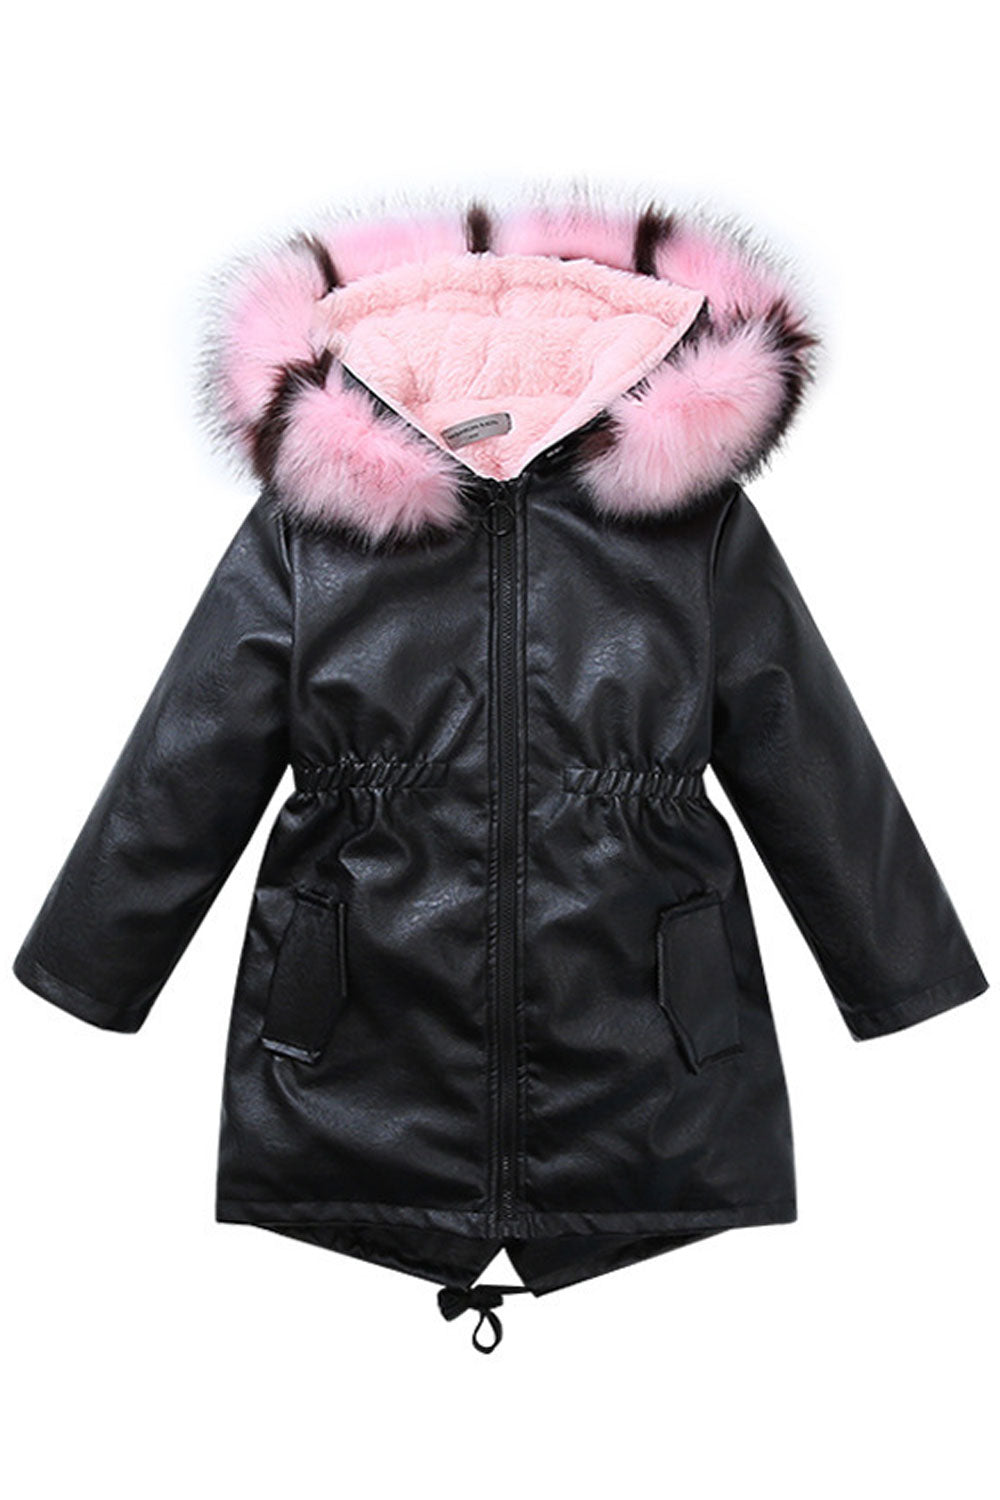 Kids Girls Beautiful & Pacifying Hairy Hooded Quickly Working Zip Closure Amazing Warm Winter Leather Jacket - KGLJK117922